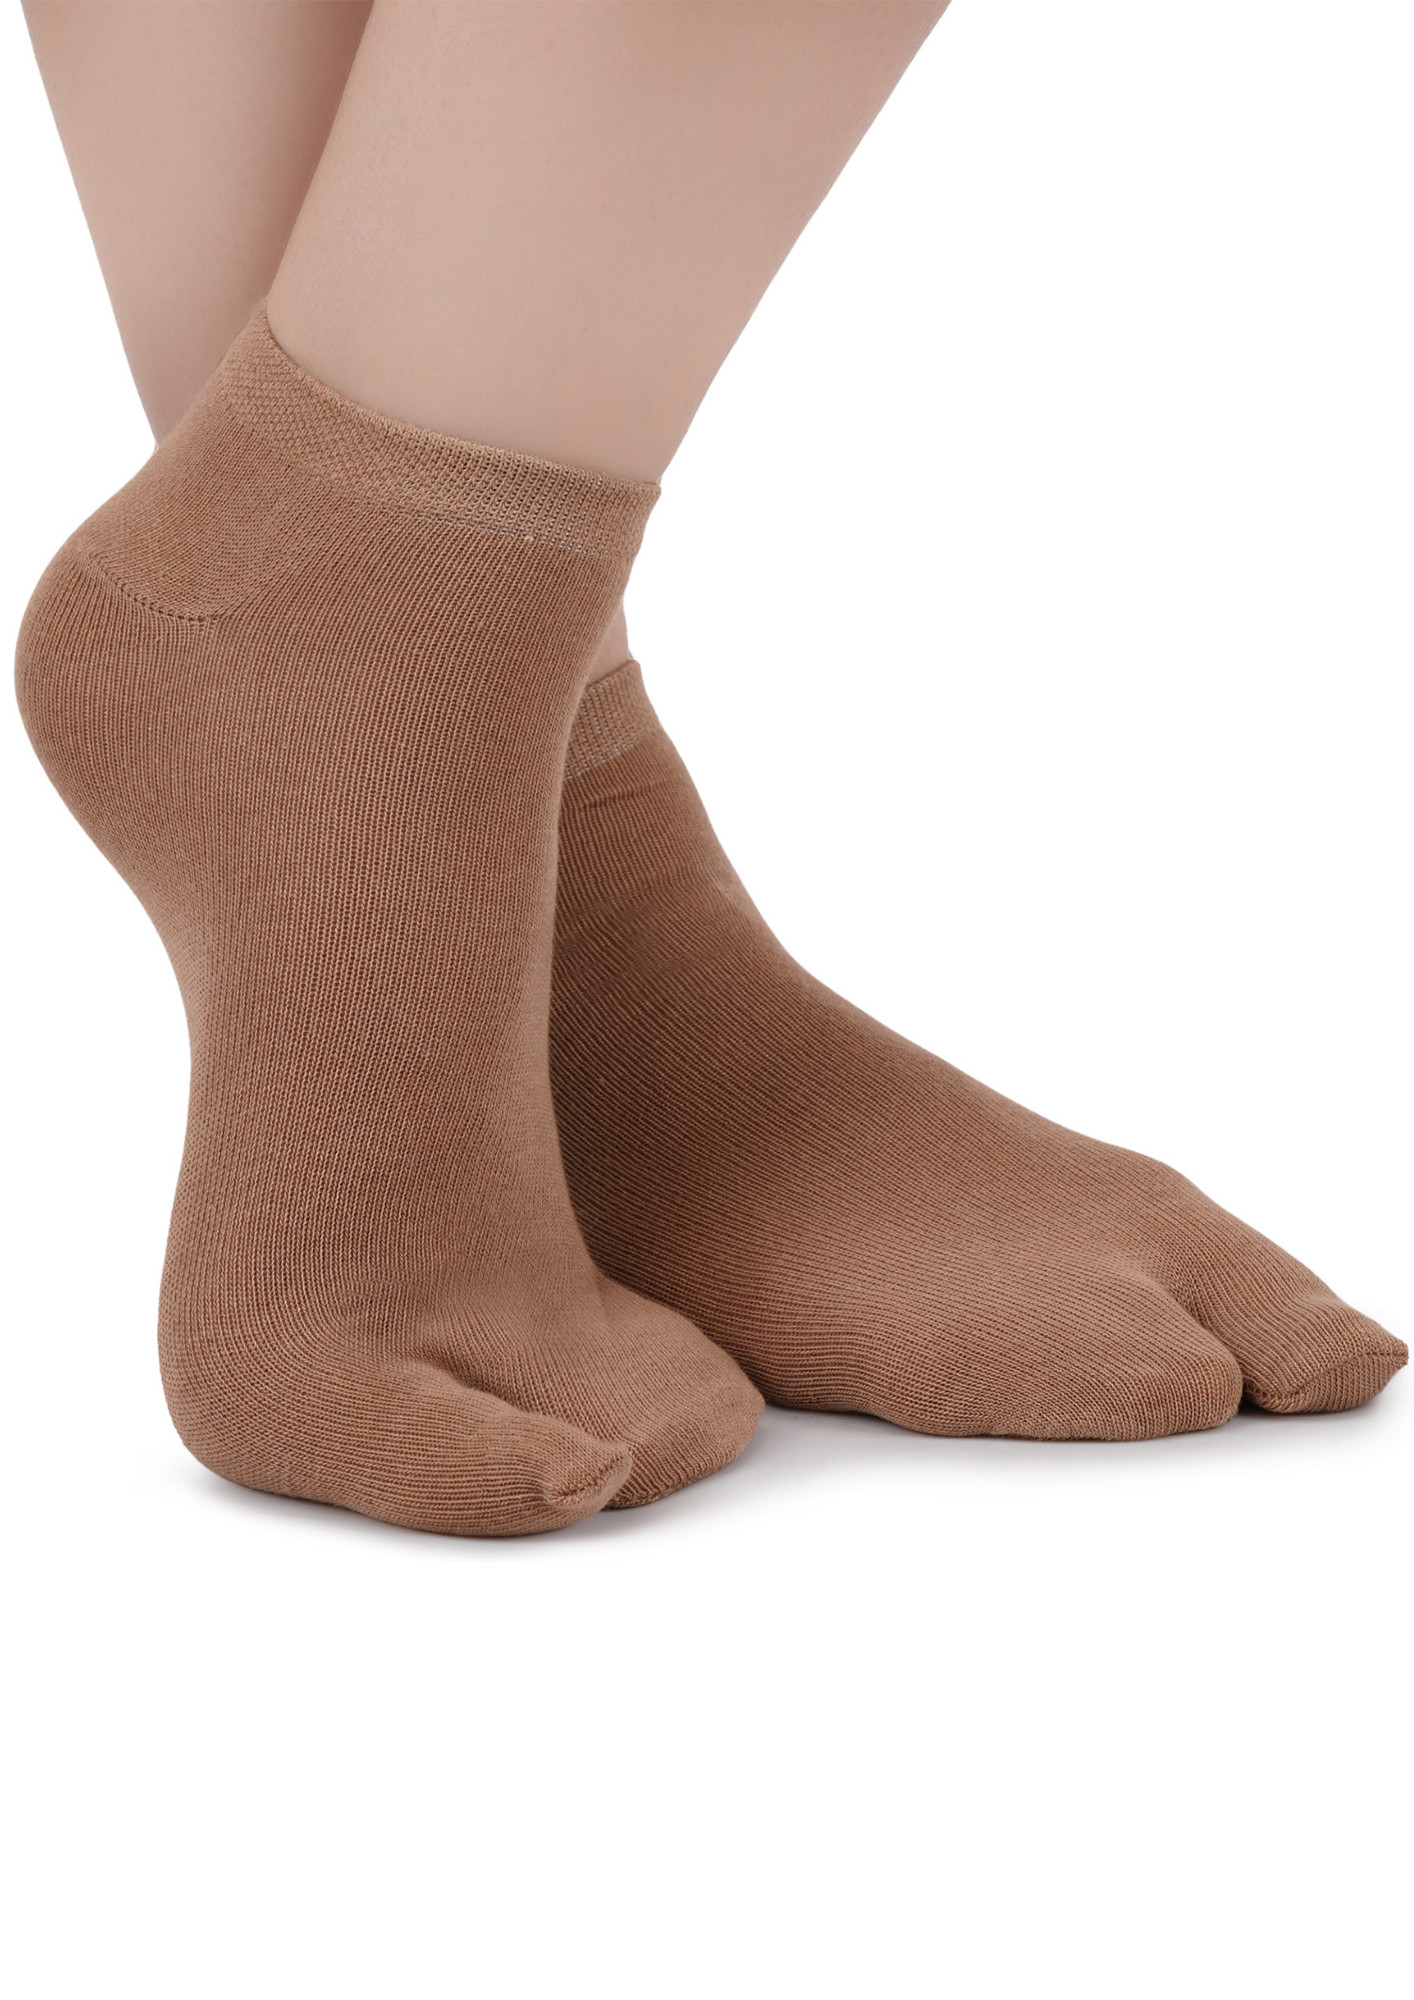 NEXT2SKIN Women Low Ankle Length Cotton Thumb Socks (Pack of 3) (DarkSkin:DarkSkin:DarkSkin)